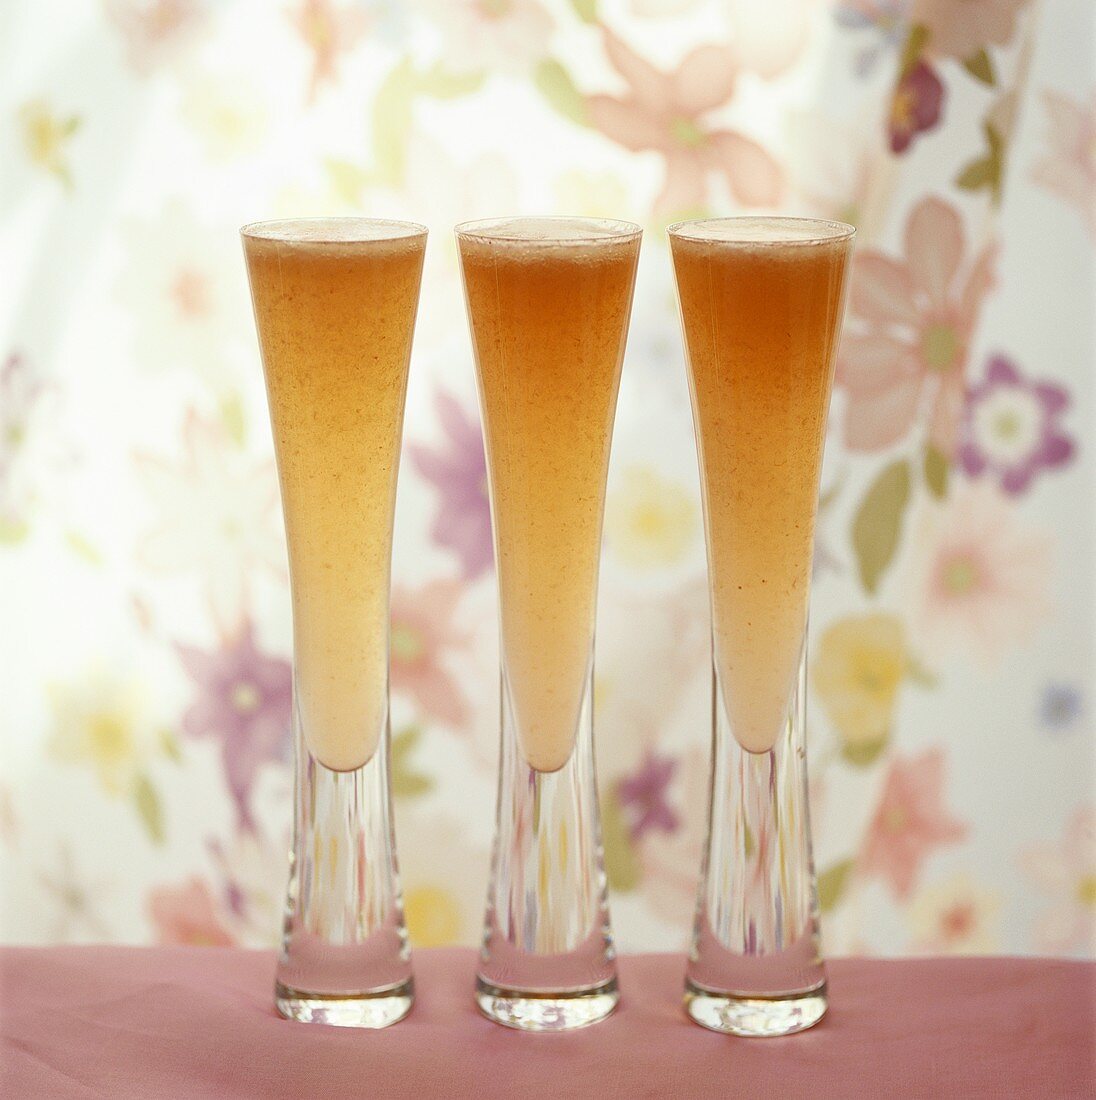 Three glasses of Bellini (sparkling wine with peach juice)